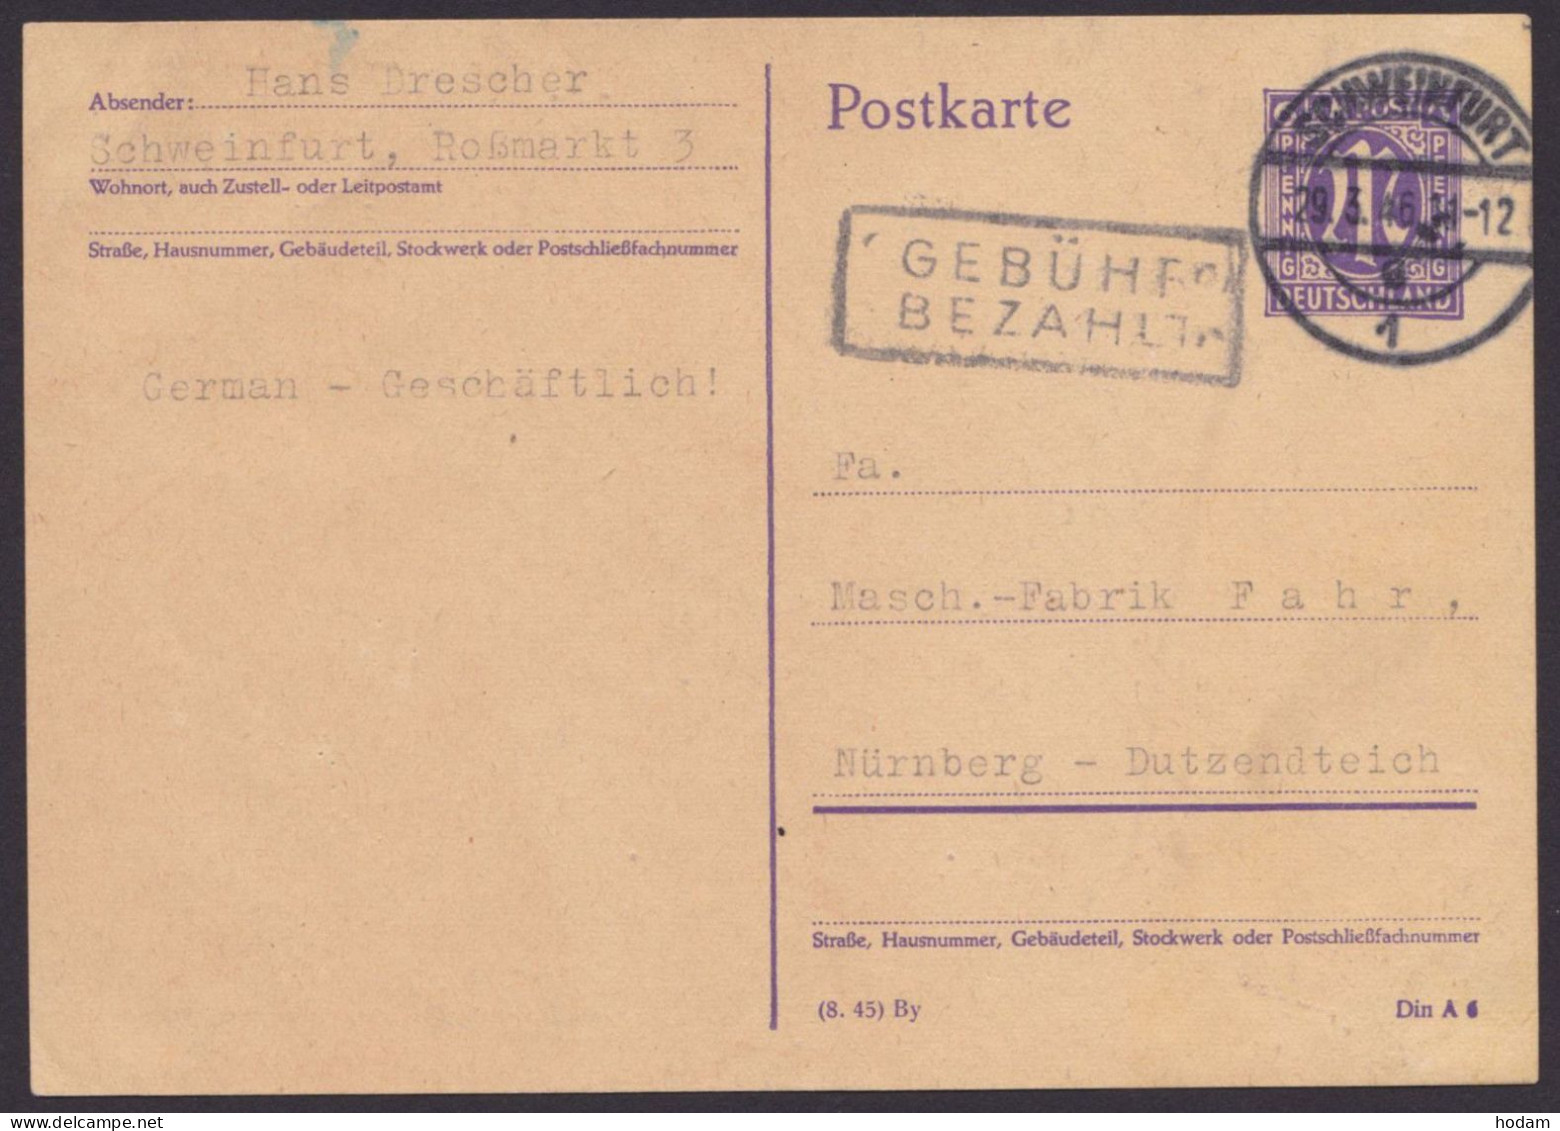 Schweinfurt: P903, O, Bedarf, 29.5.46, Ra "Gebühr Bezahlt" - Lettres & Documents